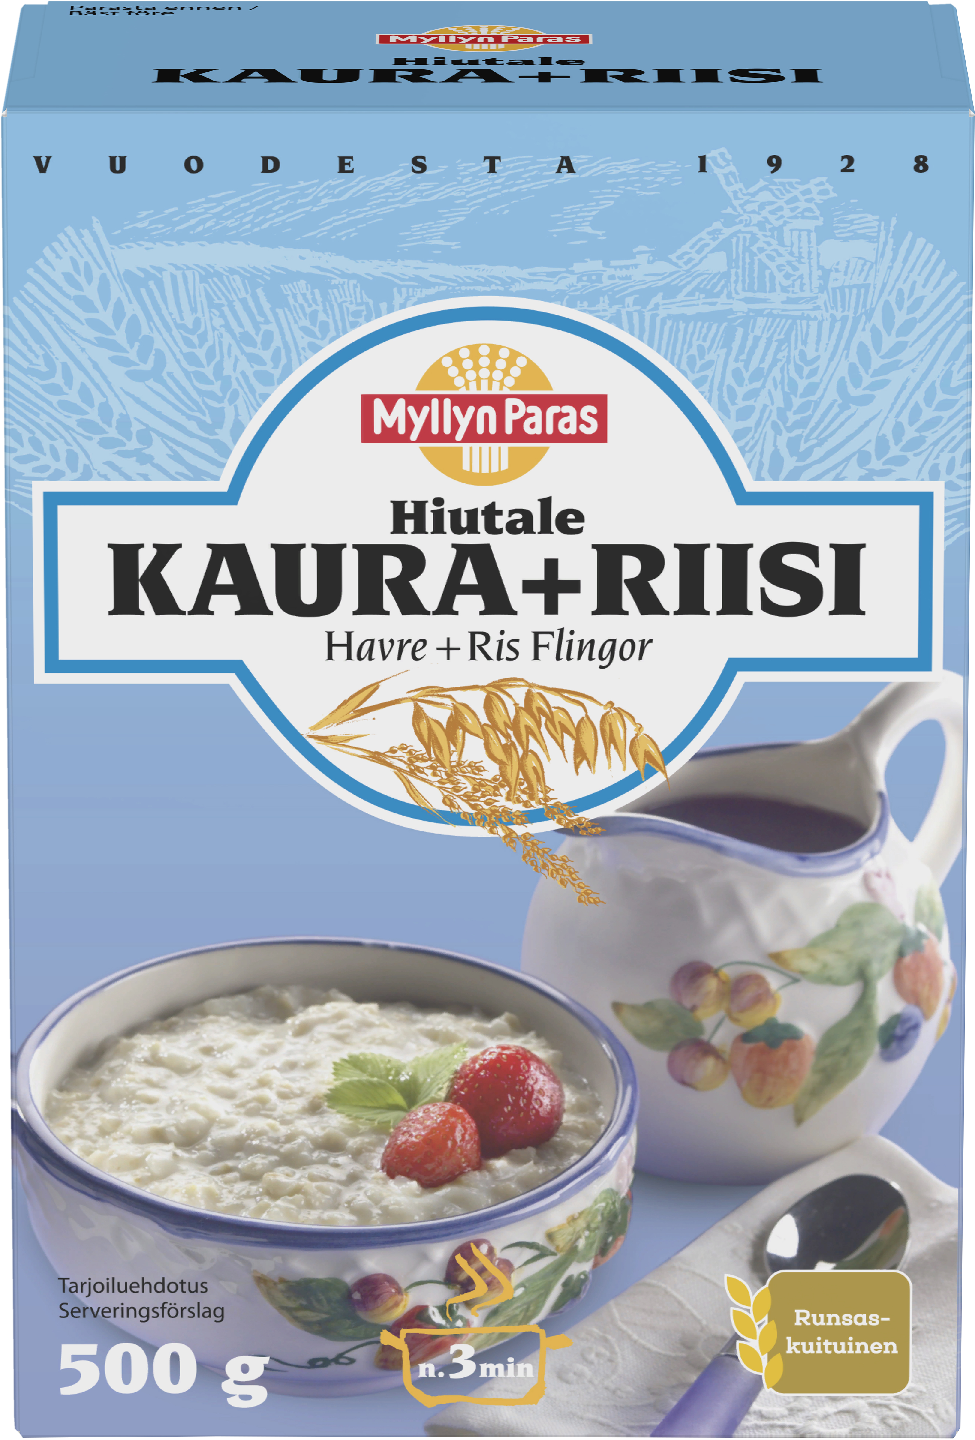 Myllyn Paras Kaura+Riisi Hiutale 500 g